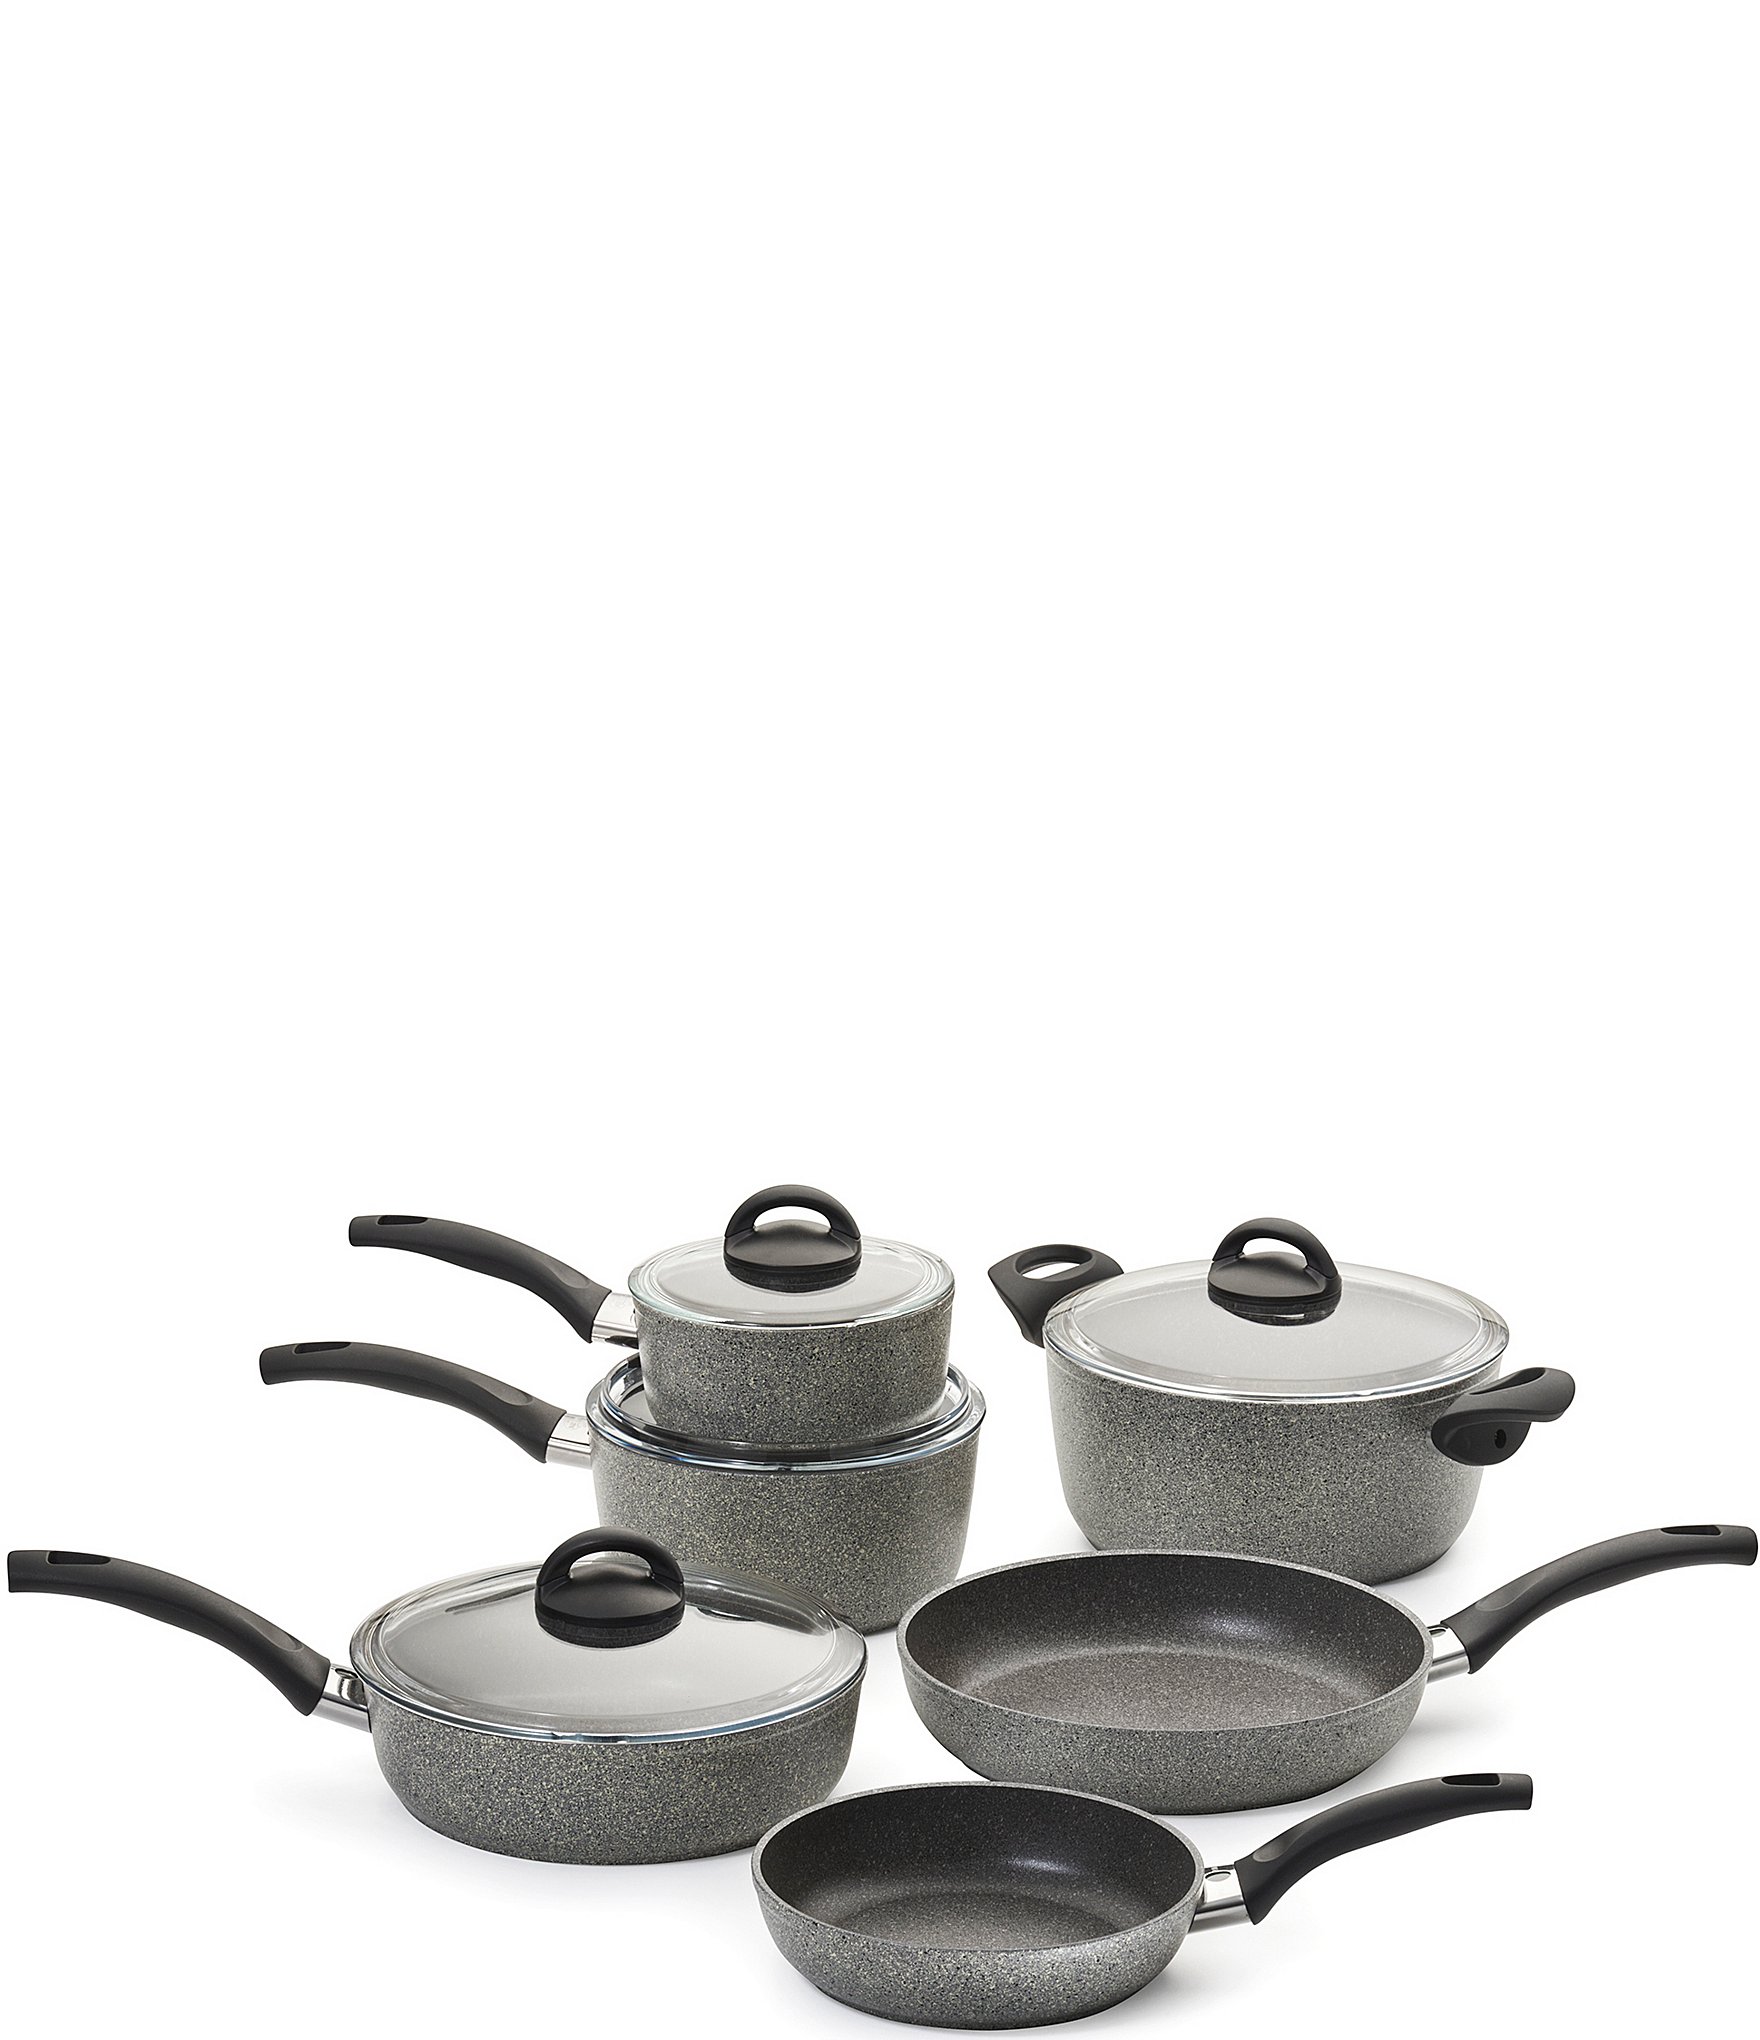 Ballarini Parma 10pc Aluminum Nonstick Cookware Set, Marled Grey